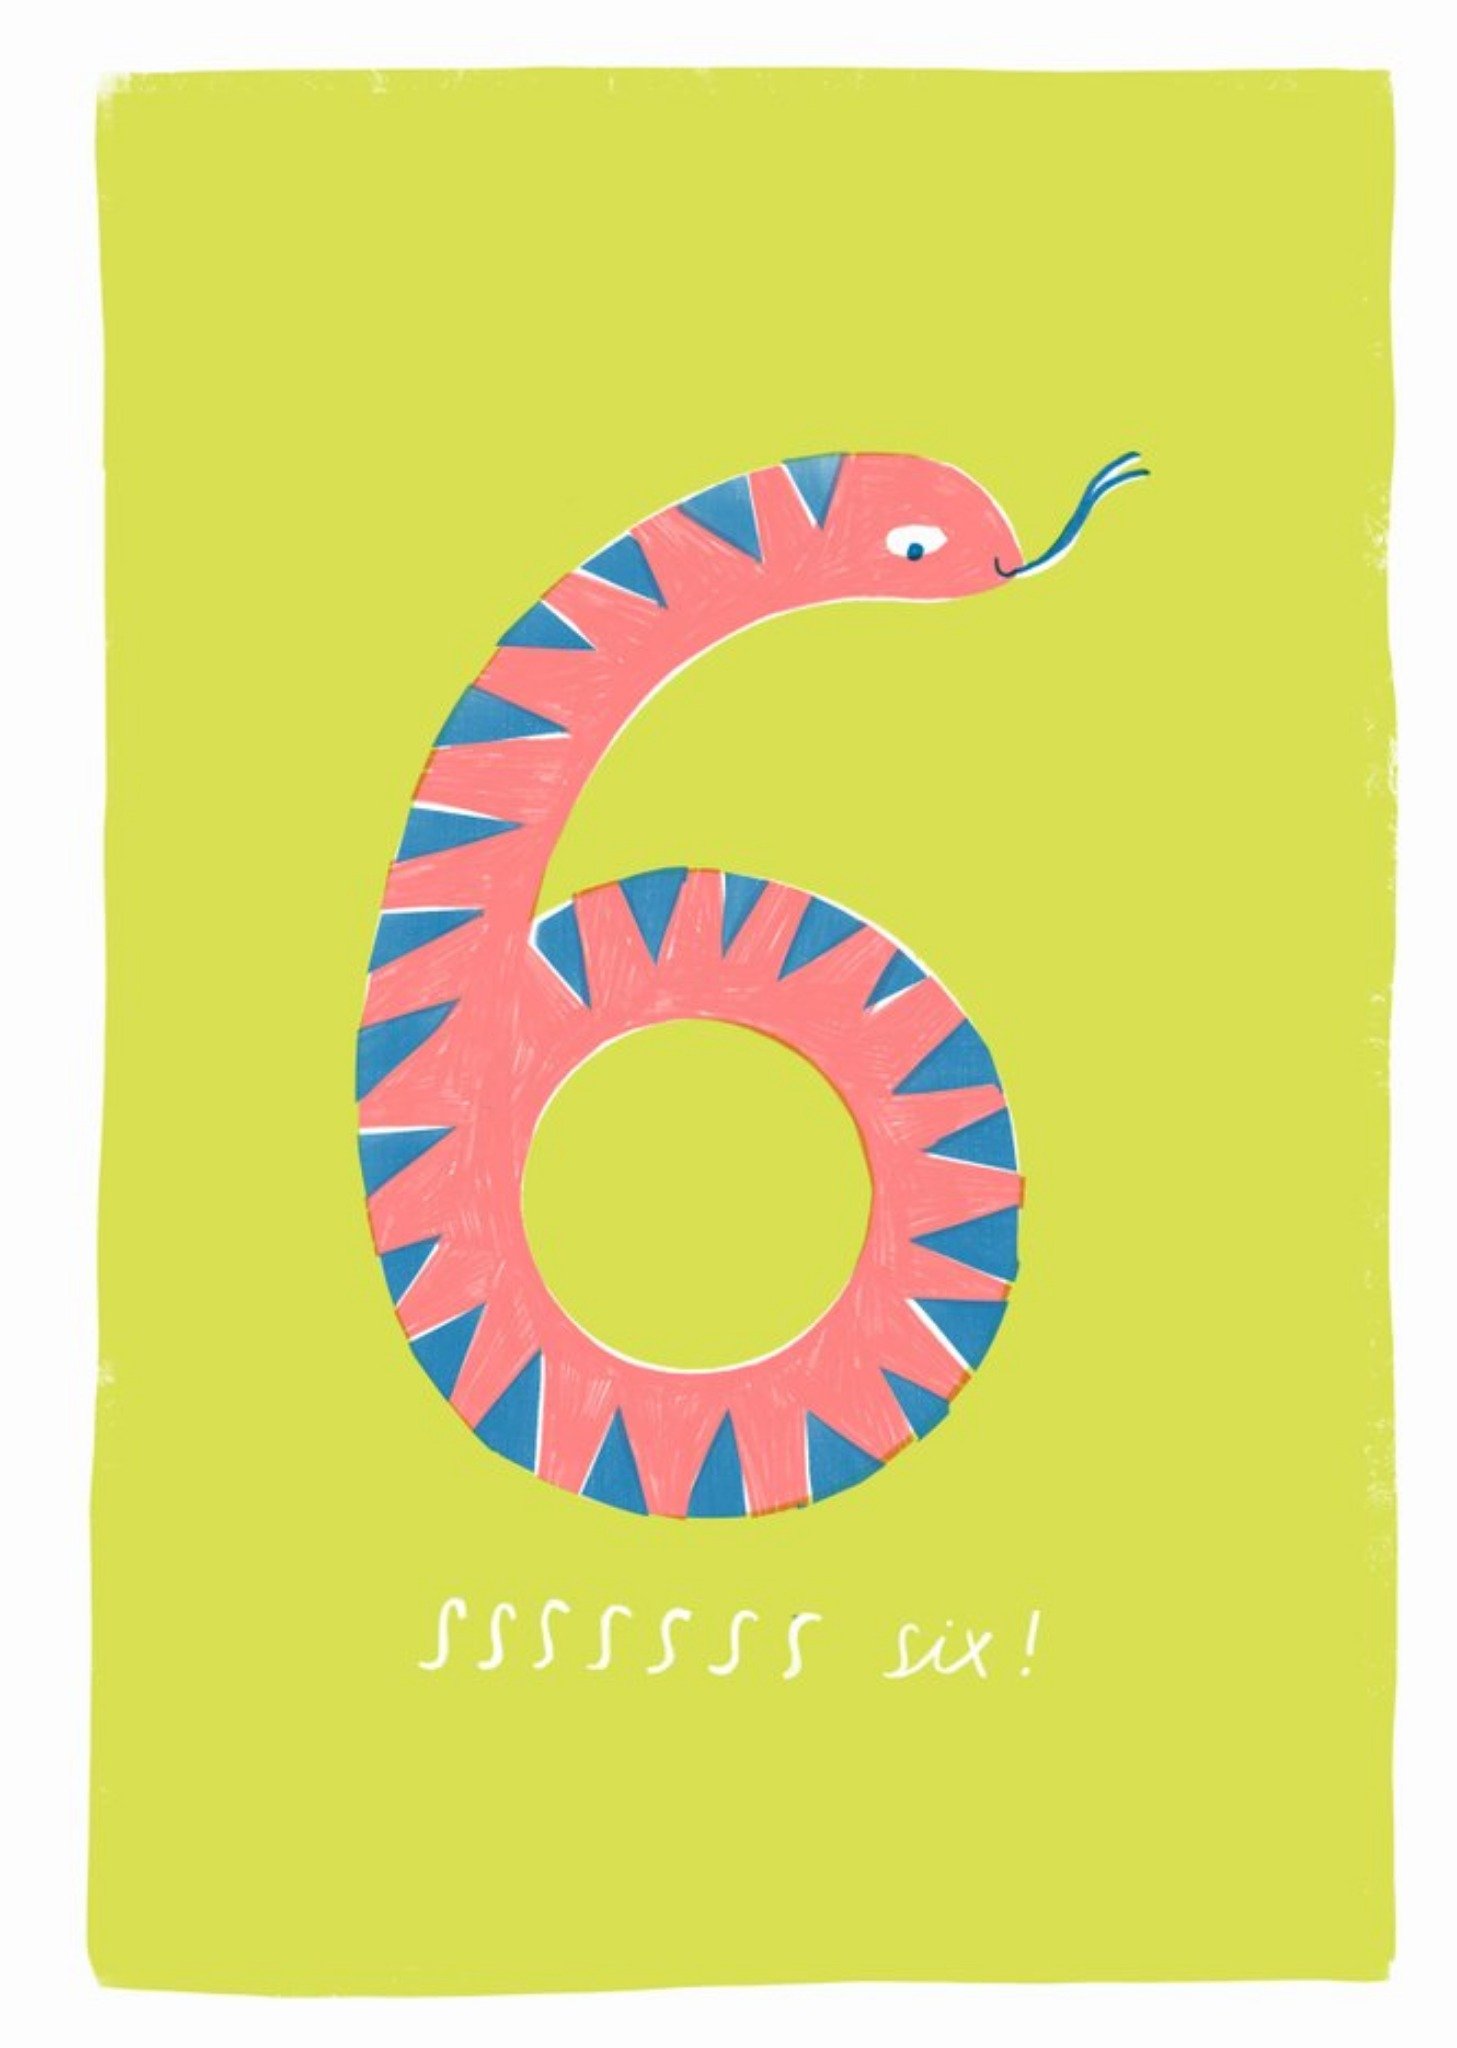 Other Jess Rose Illustration Cute Snake Sssssss Six Baby Sixth Card Ecard